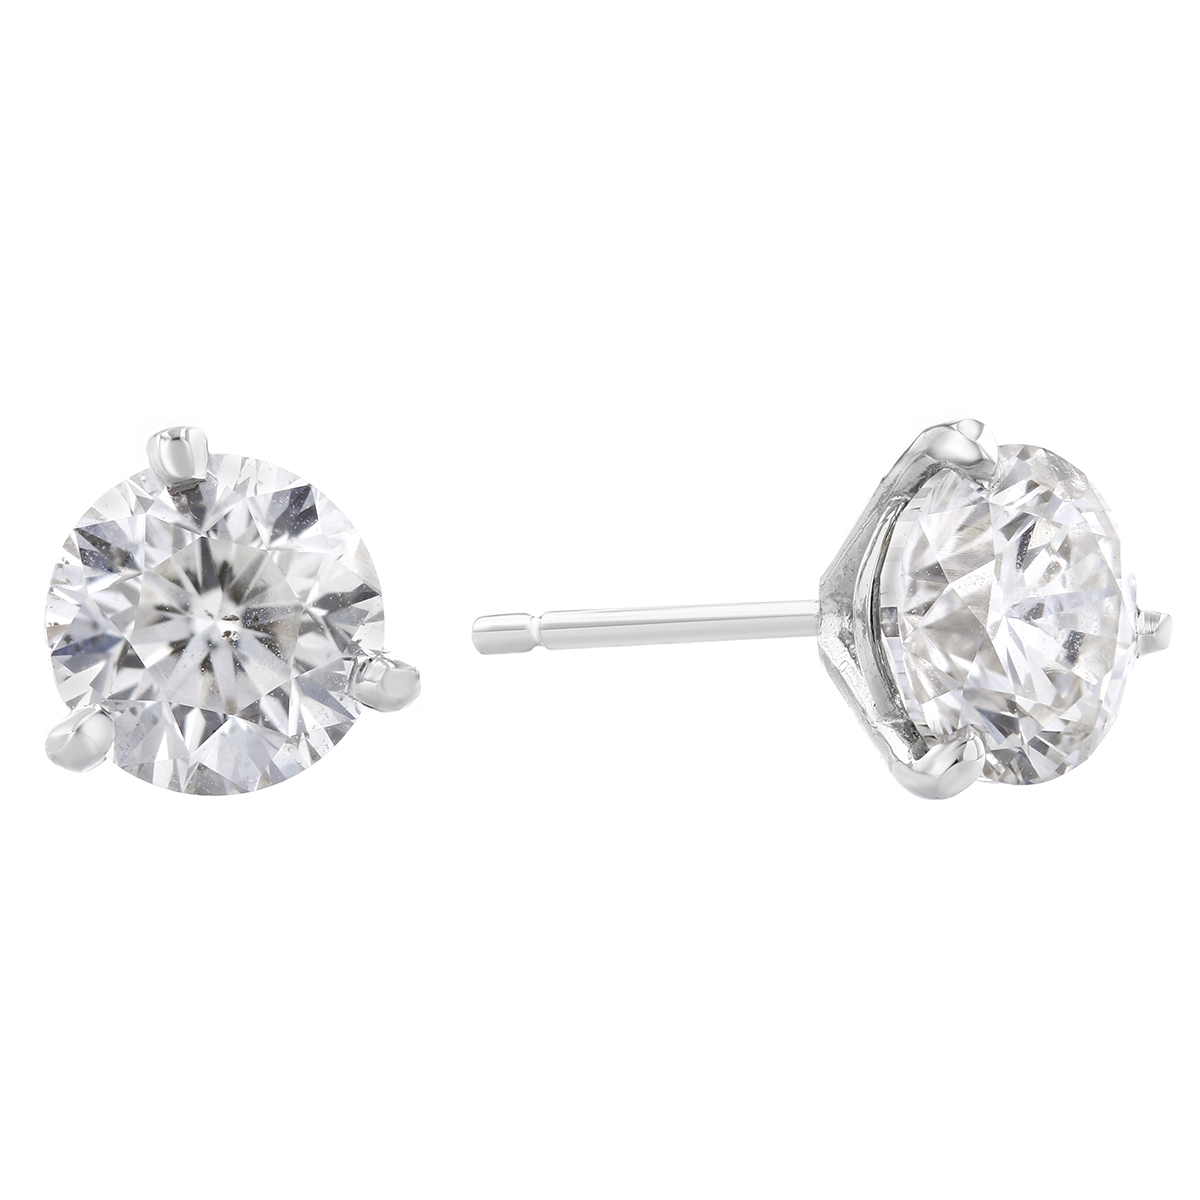 18K White Gold Round Diamond Stud Earrings, 2.01cttw | Borsheims